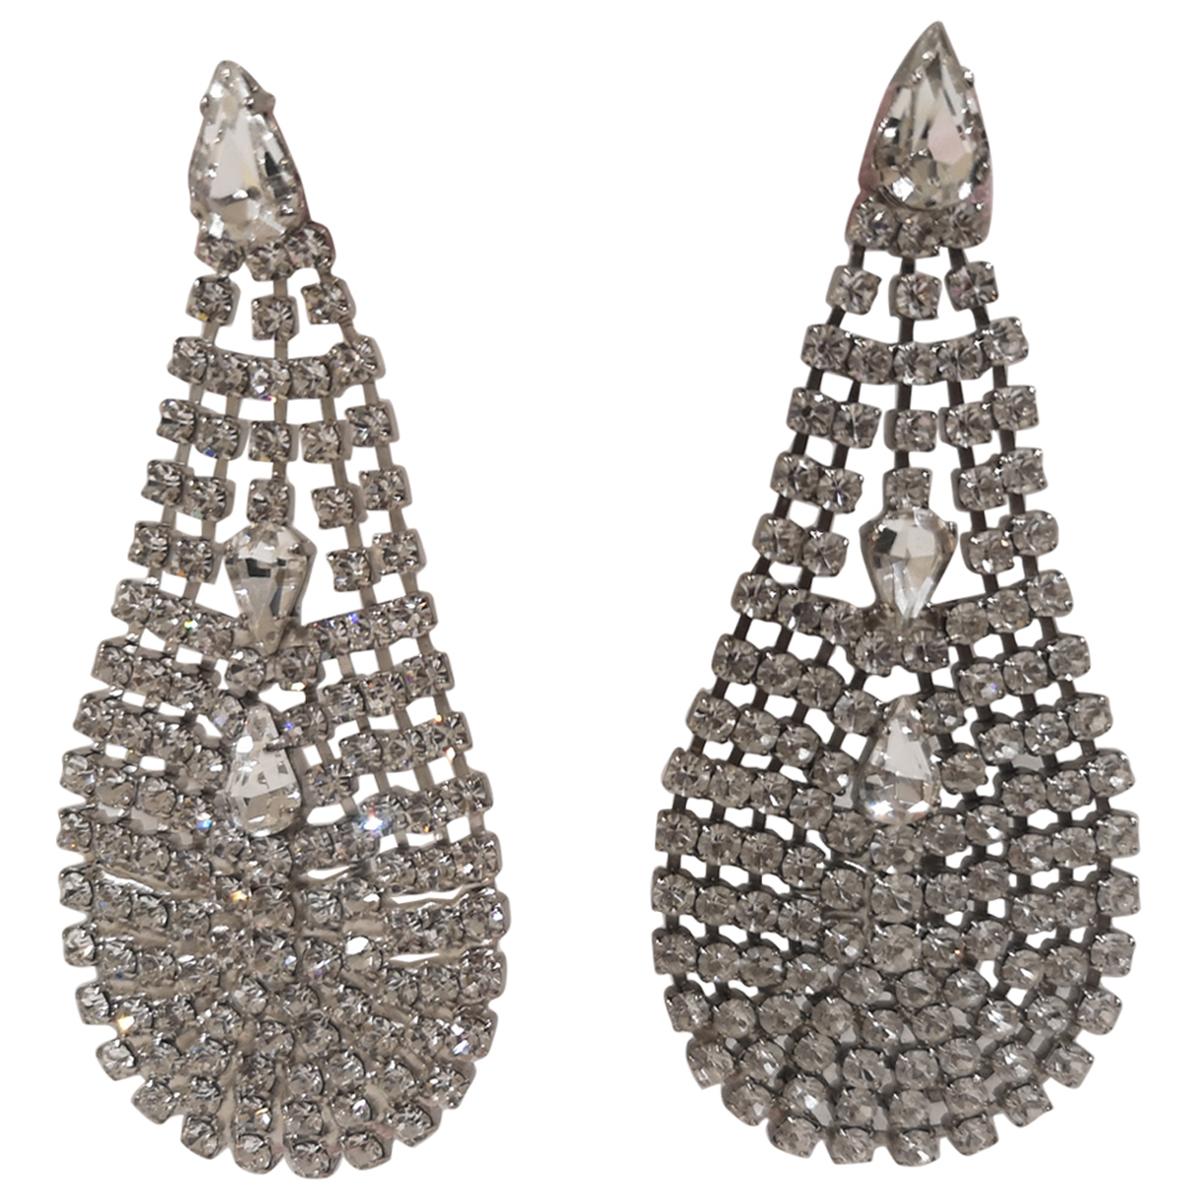 LisaC crystal swarovski pendant drops earrings